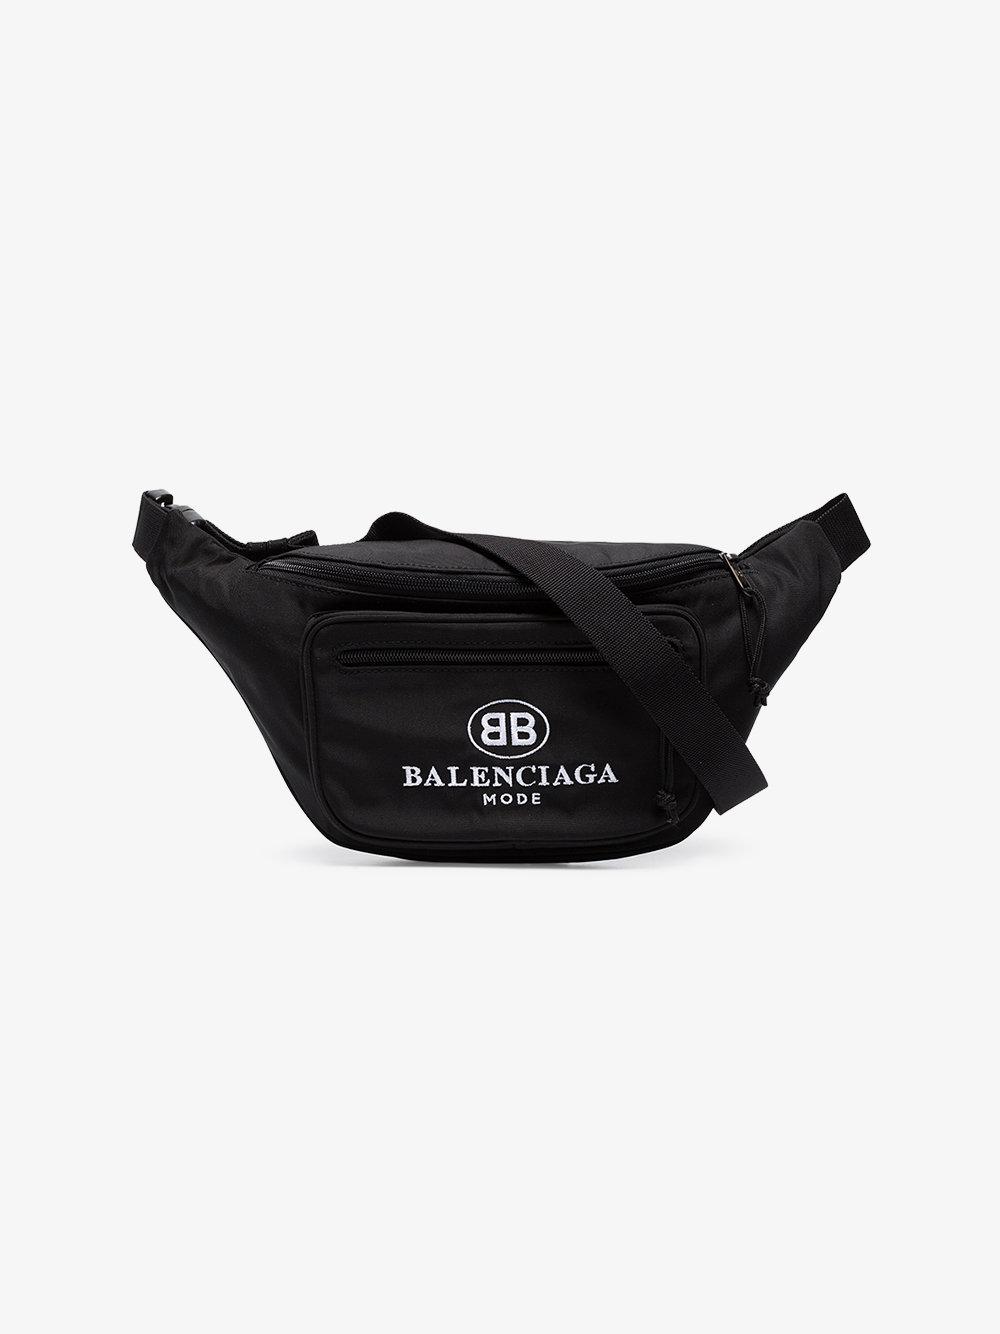 Lyst - Balenciaga Explorer Belt Pack in Black for Men